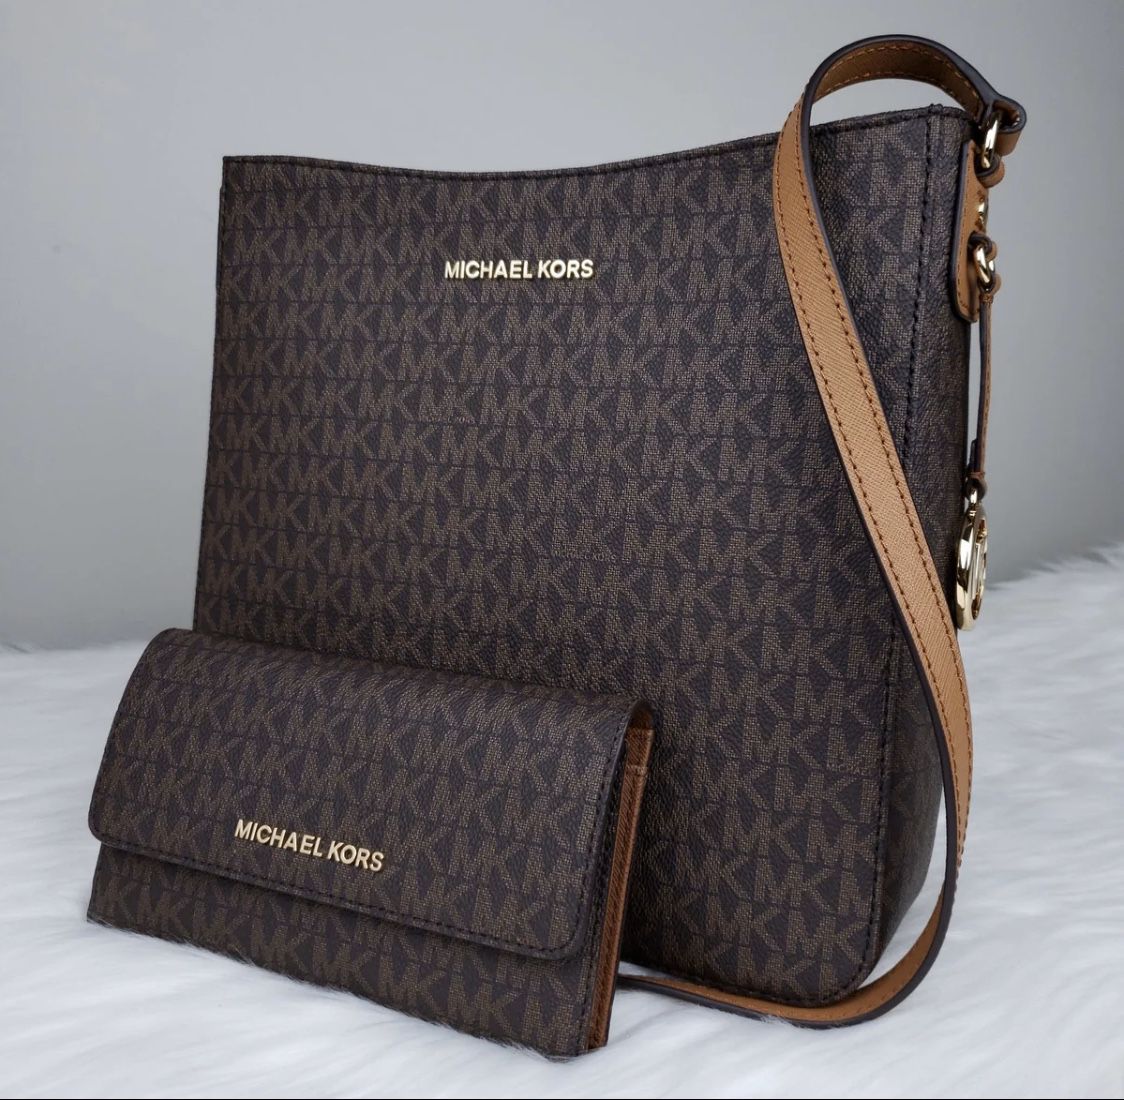 Michael Kors handbag and wallet